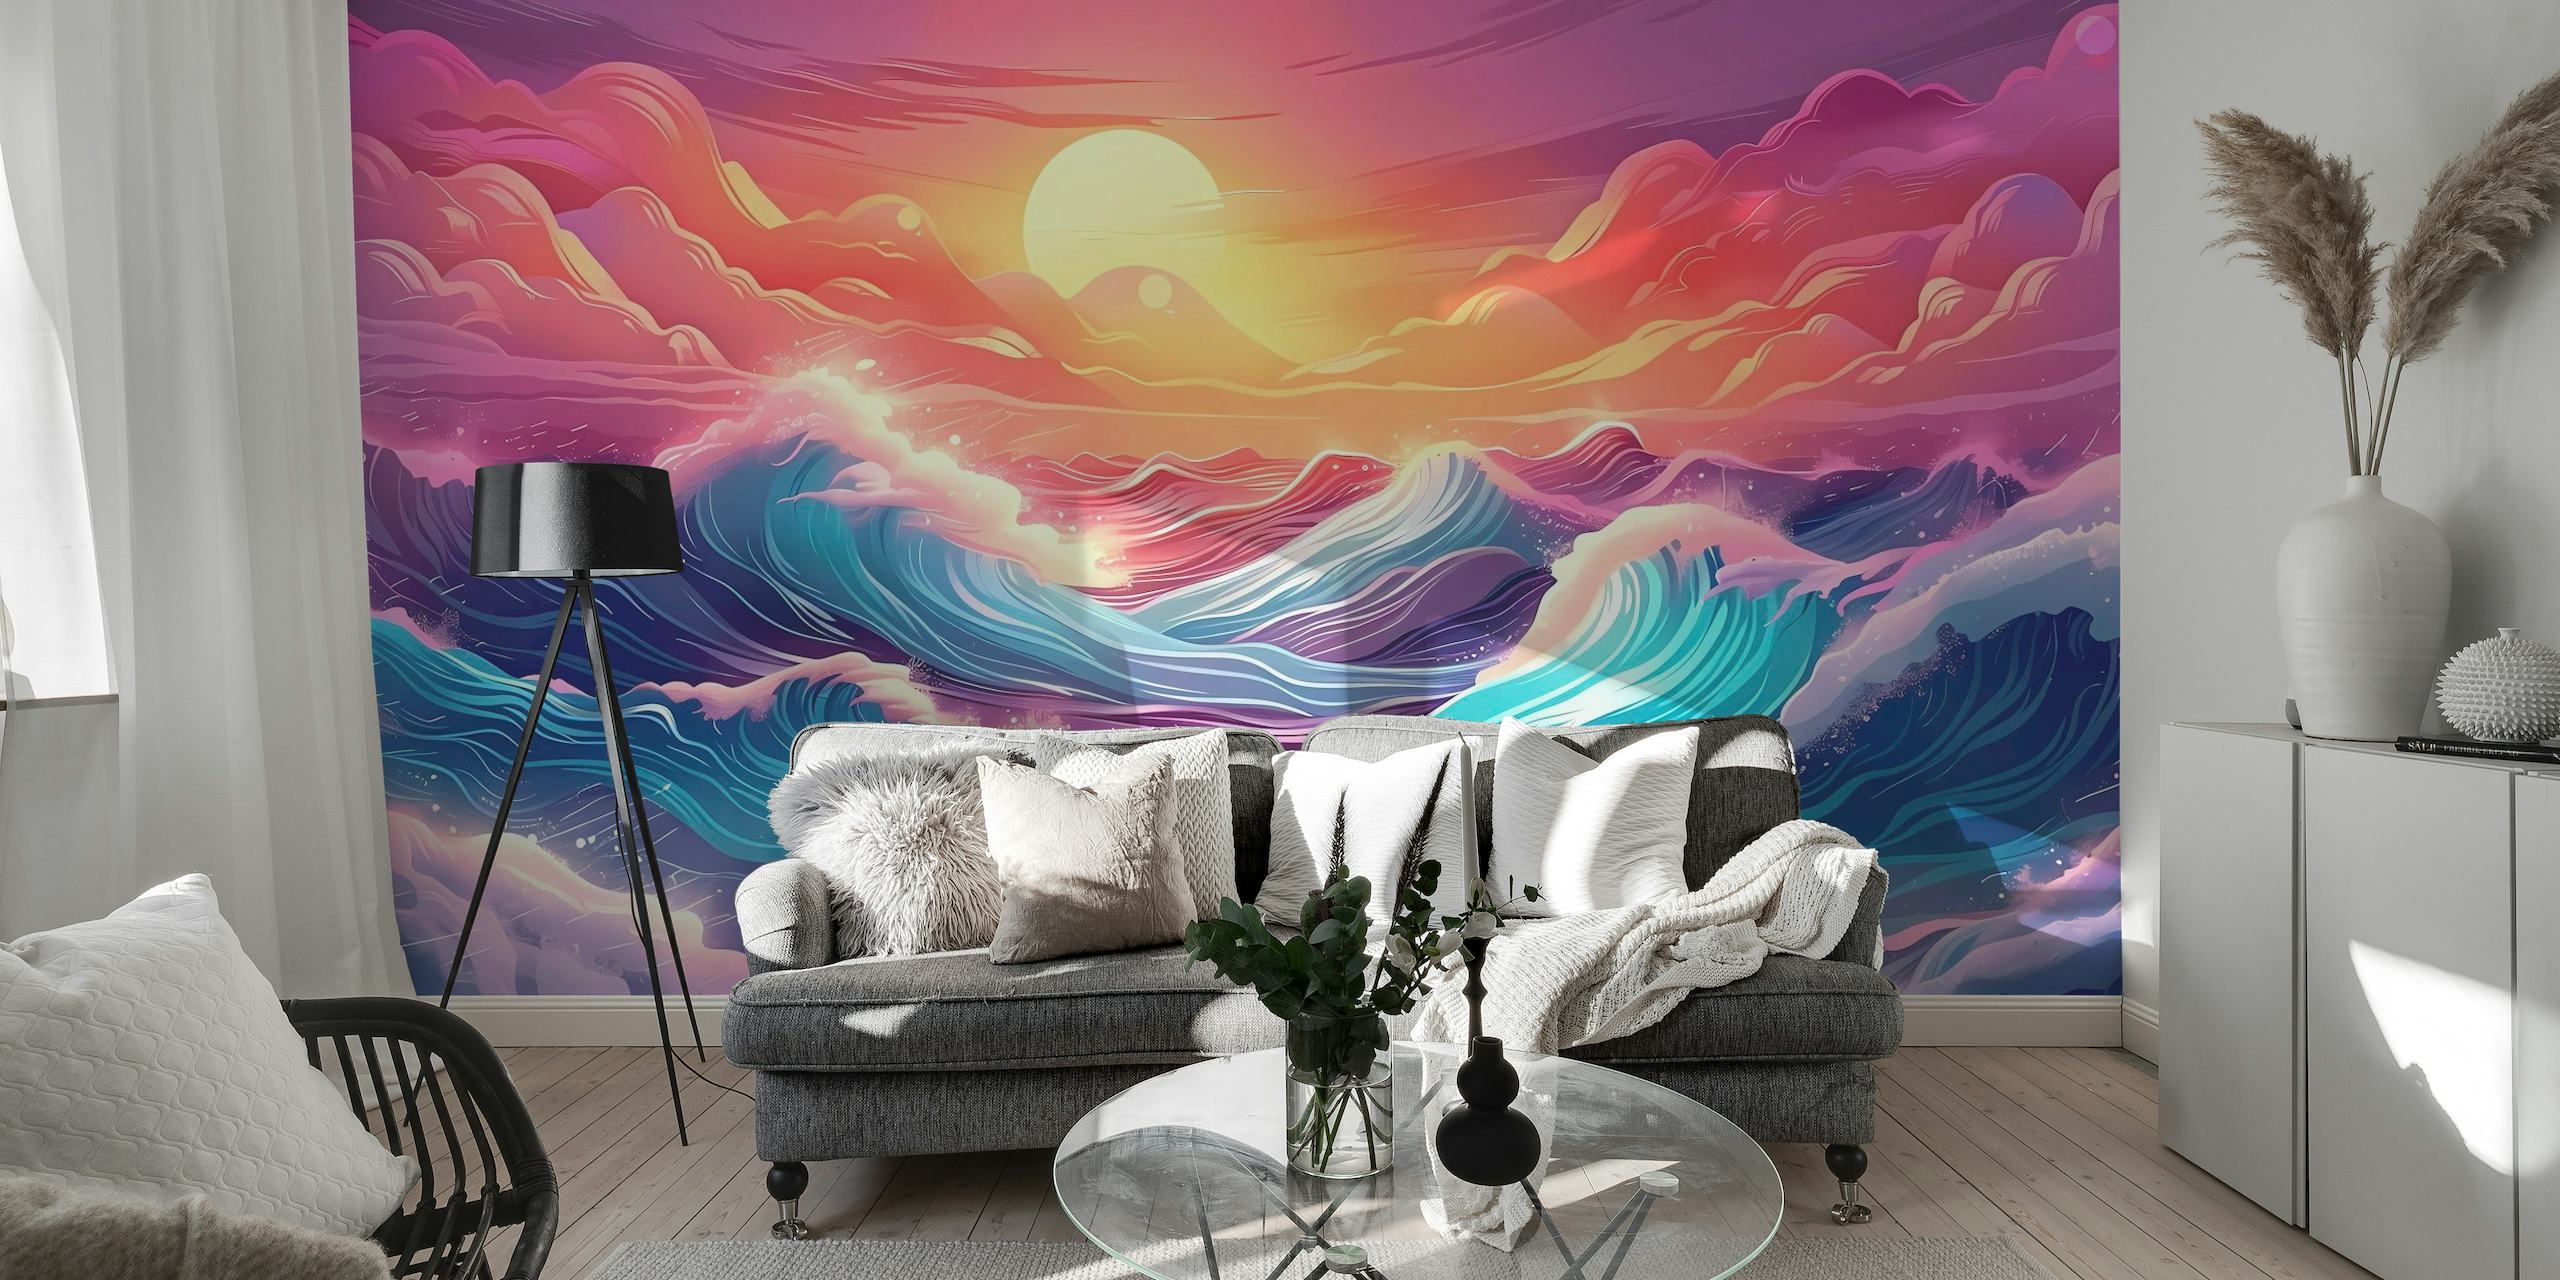 Waves on a Beautiful Sunset papel pintado